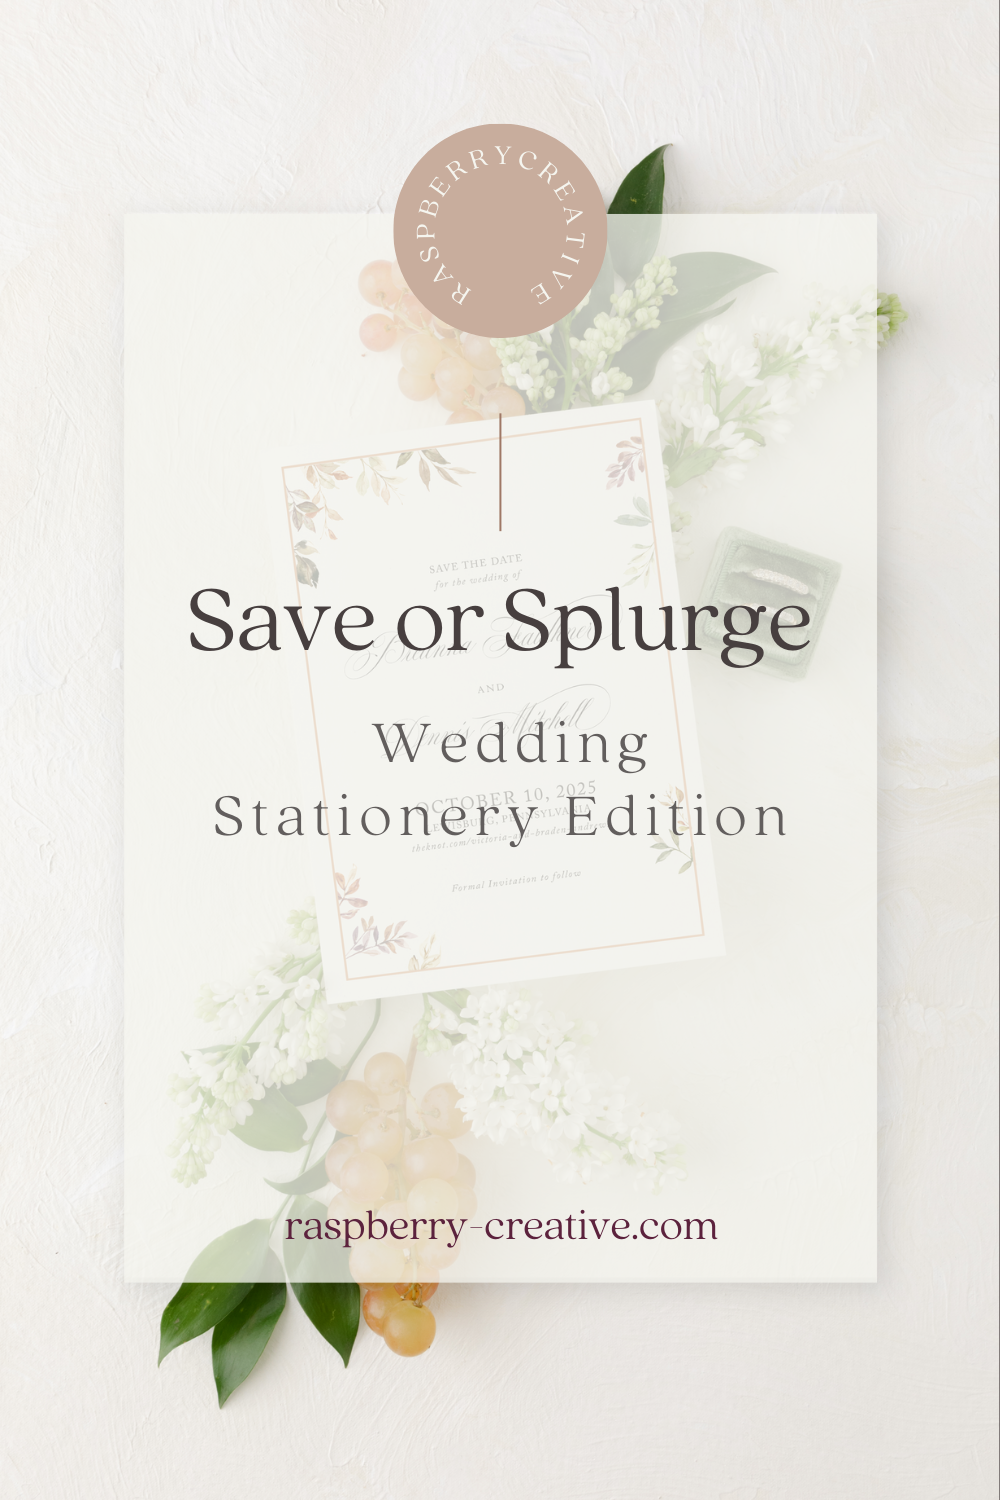 Save or Splurge: Wedding Stationery Edition